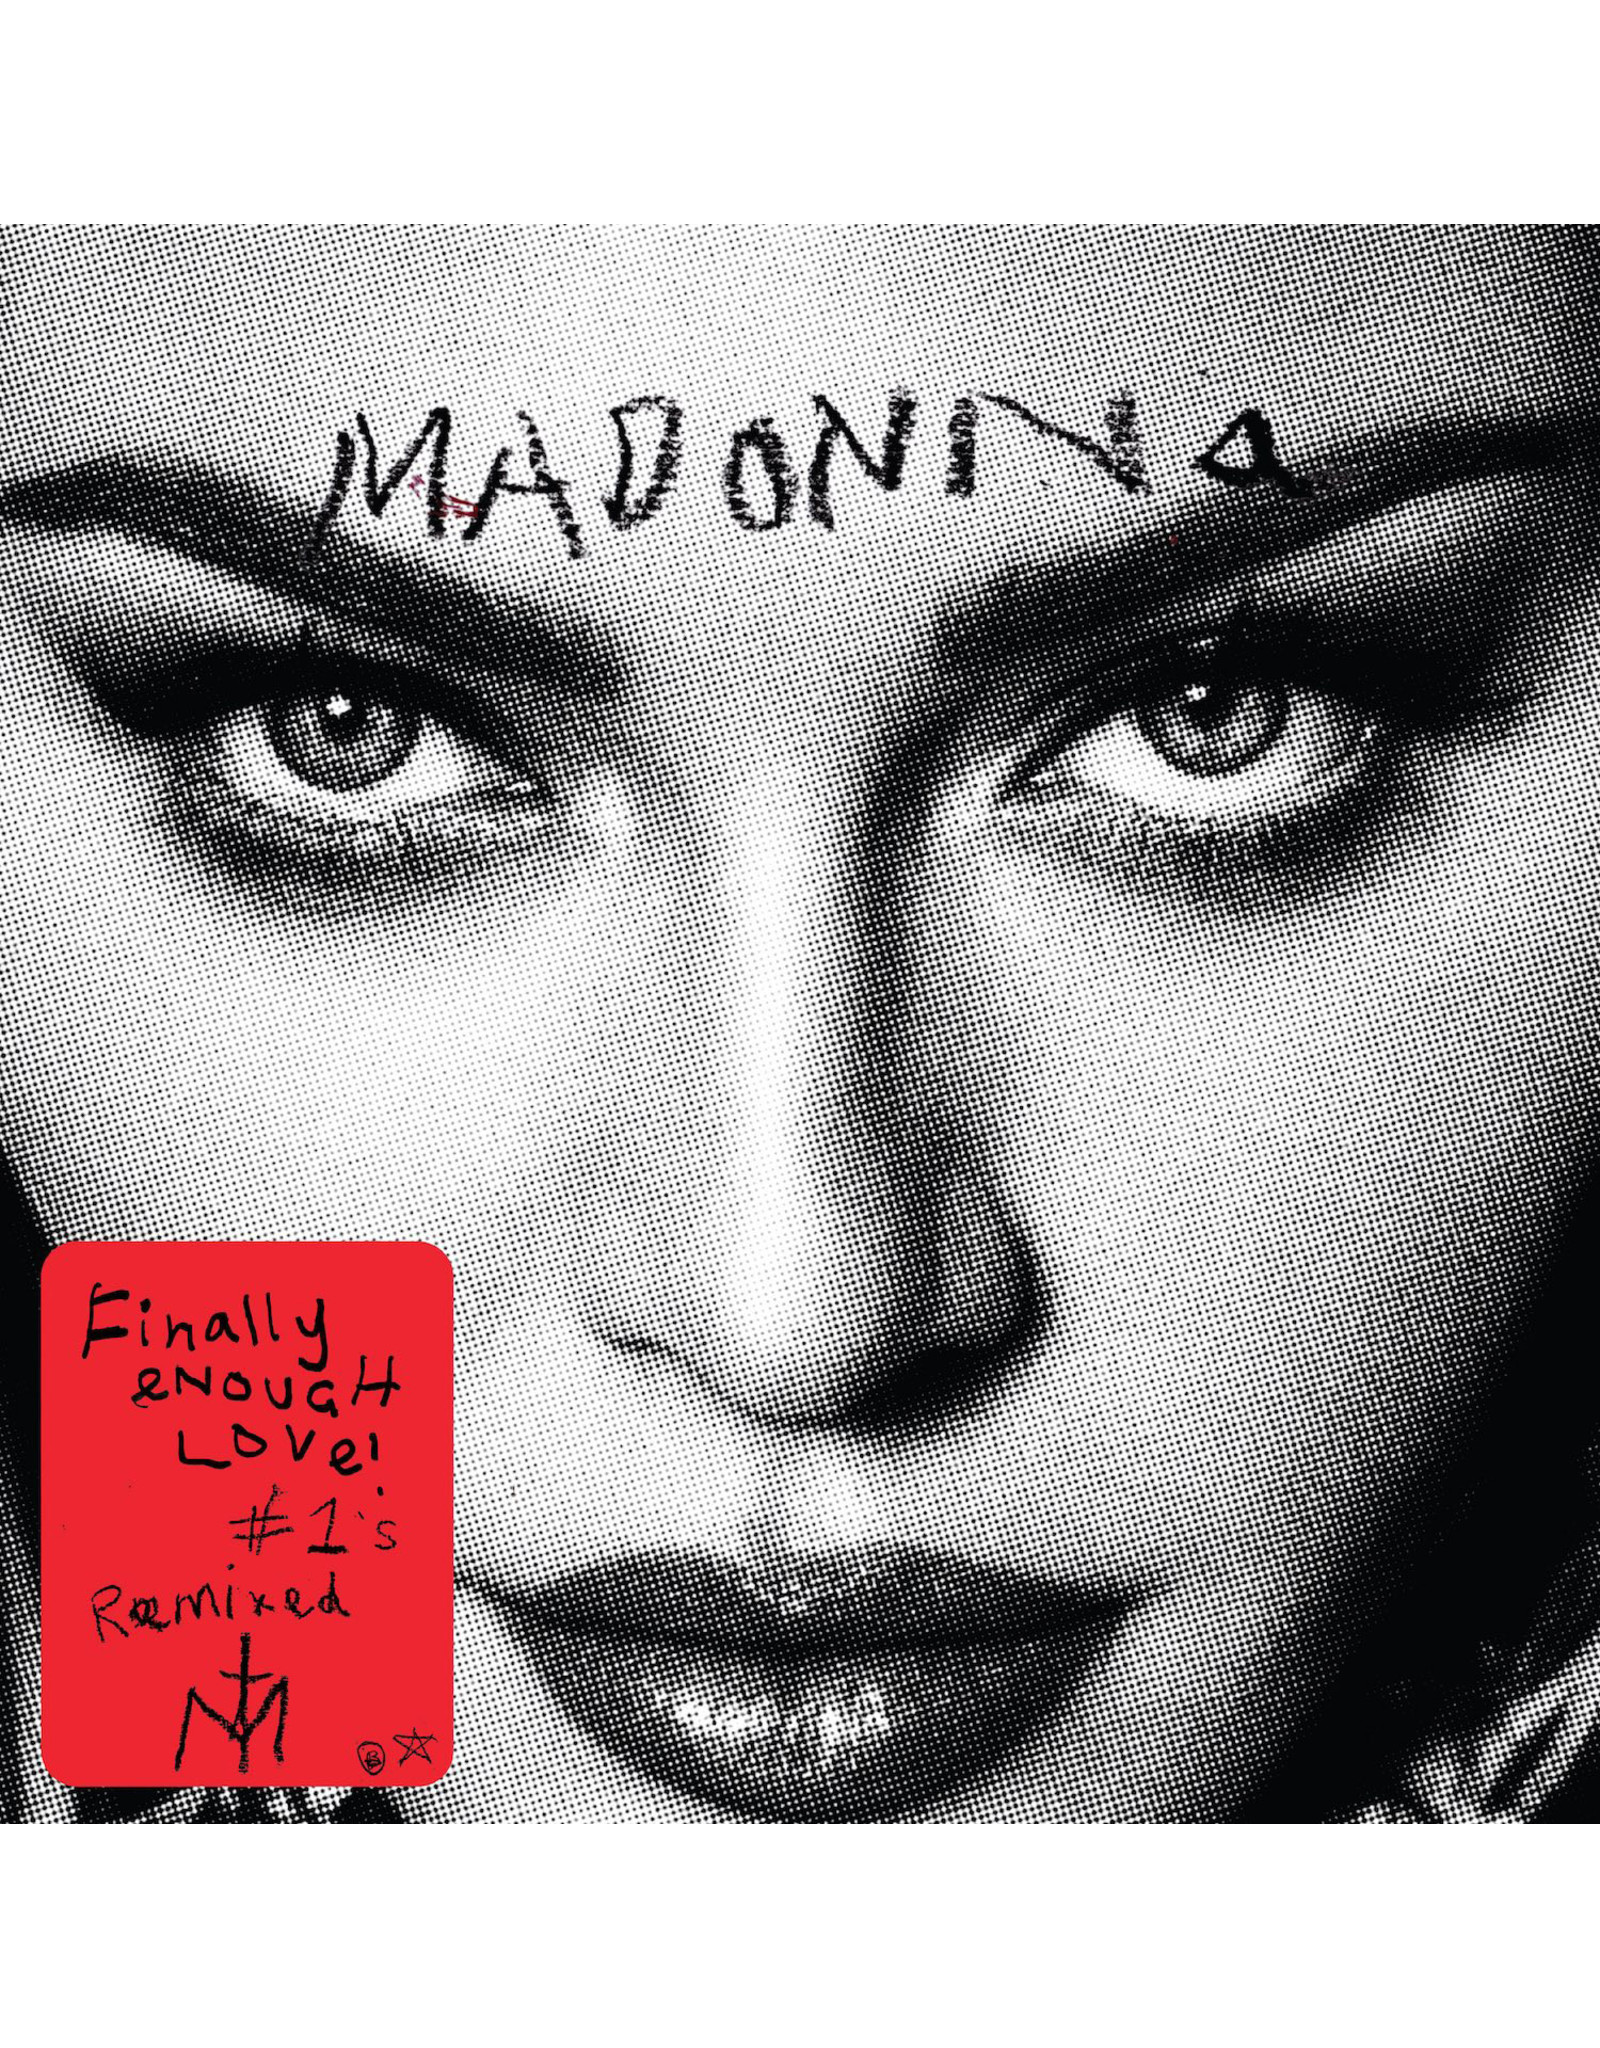 Madonna - Finally Enough Love (Exclusive Red Vinyl)